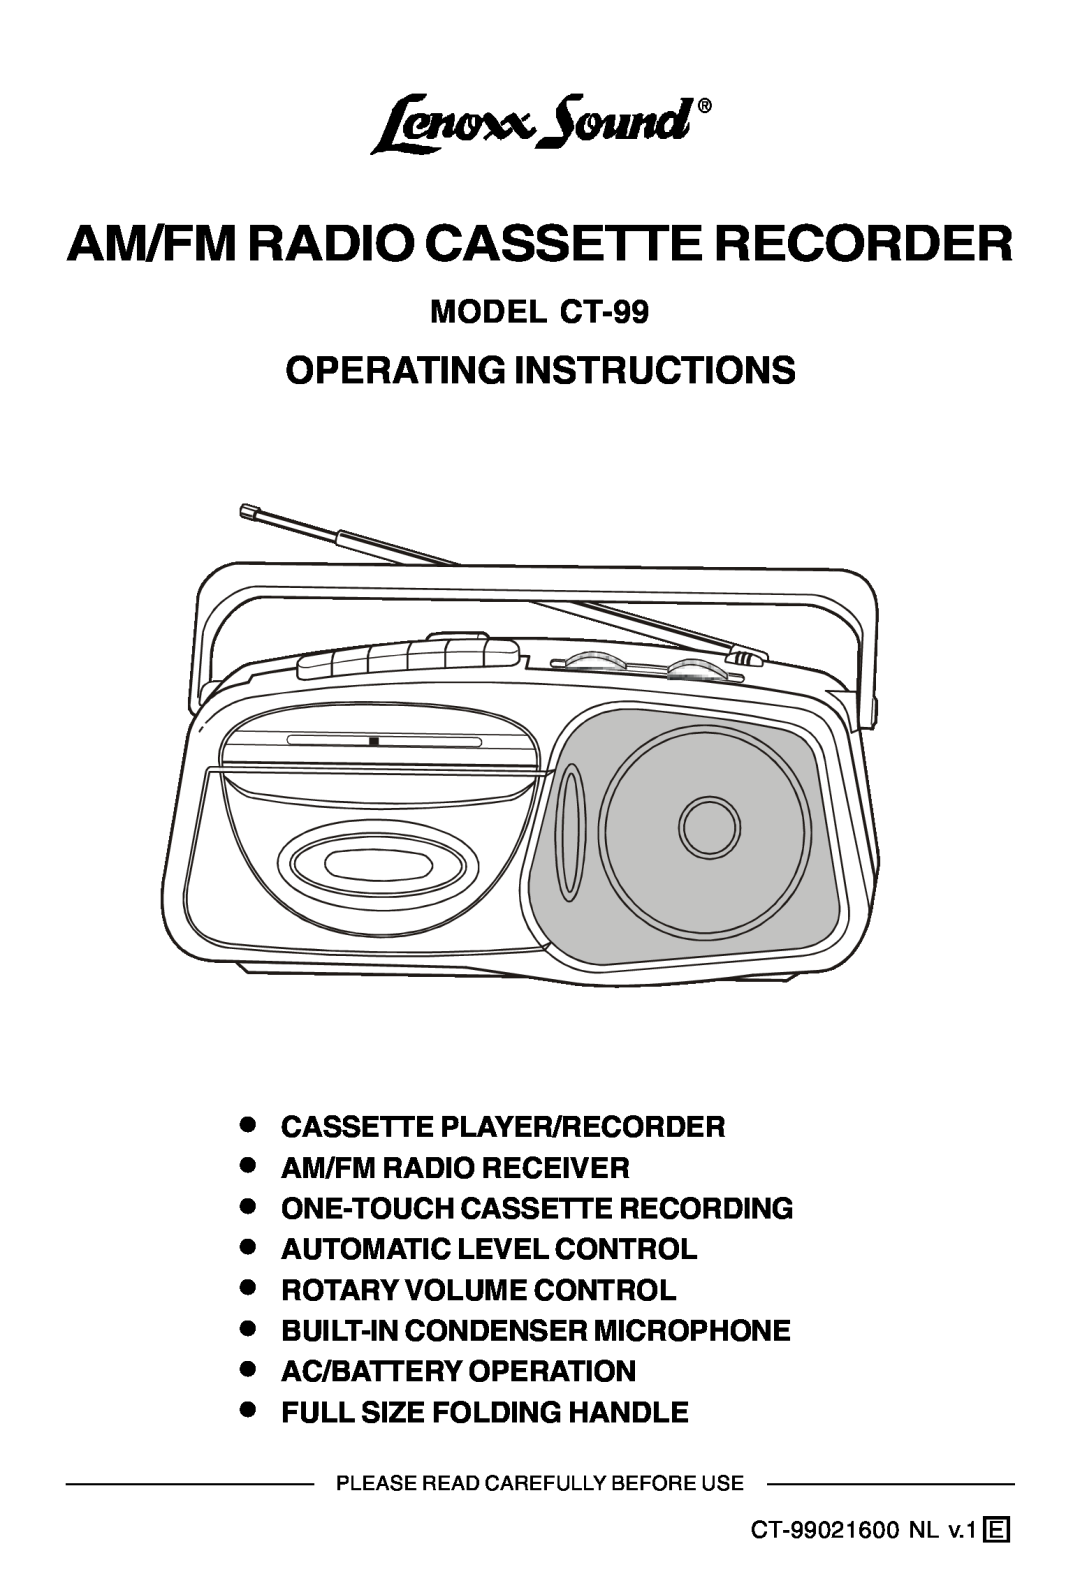 Lenoxx Electronics operating instructions MODEL CT-99, Full Size Folding Handle, Am/Fm Radio Cassette Recorder 